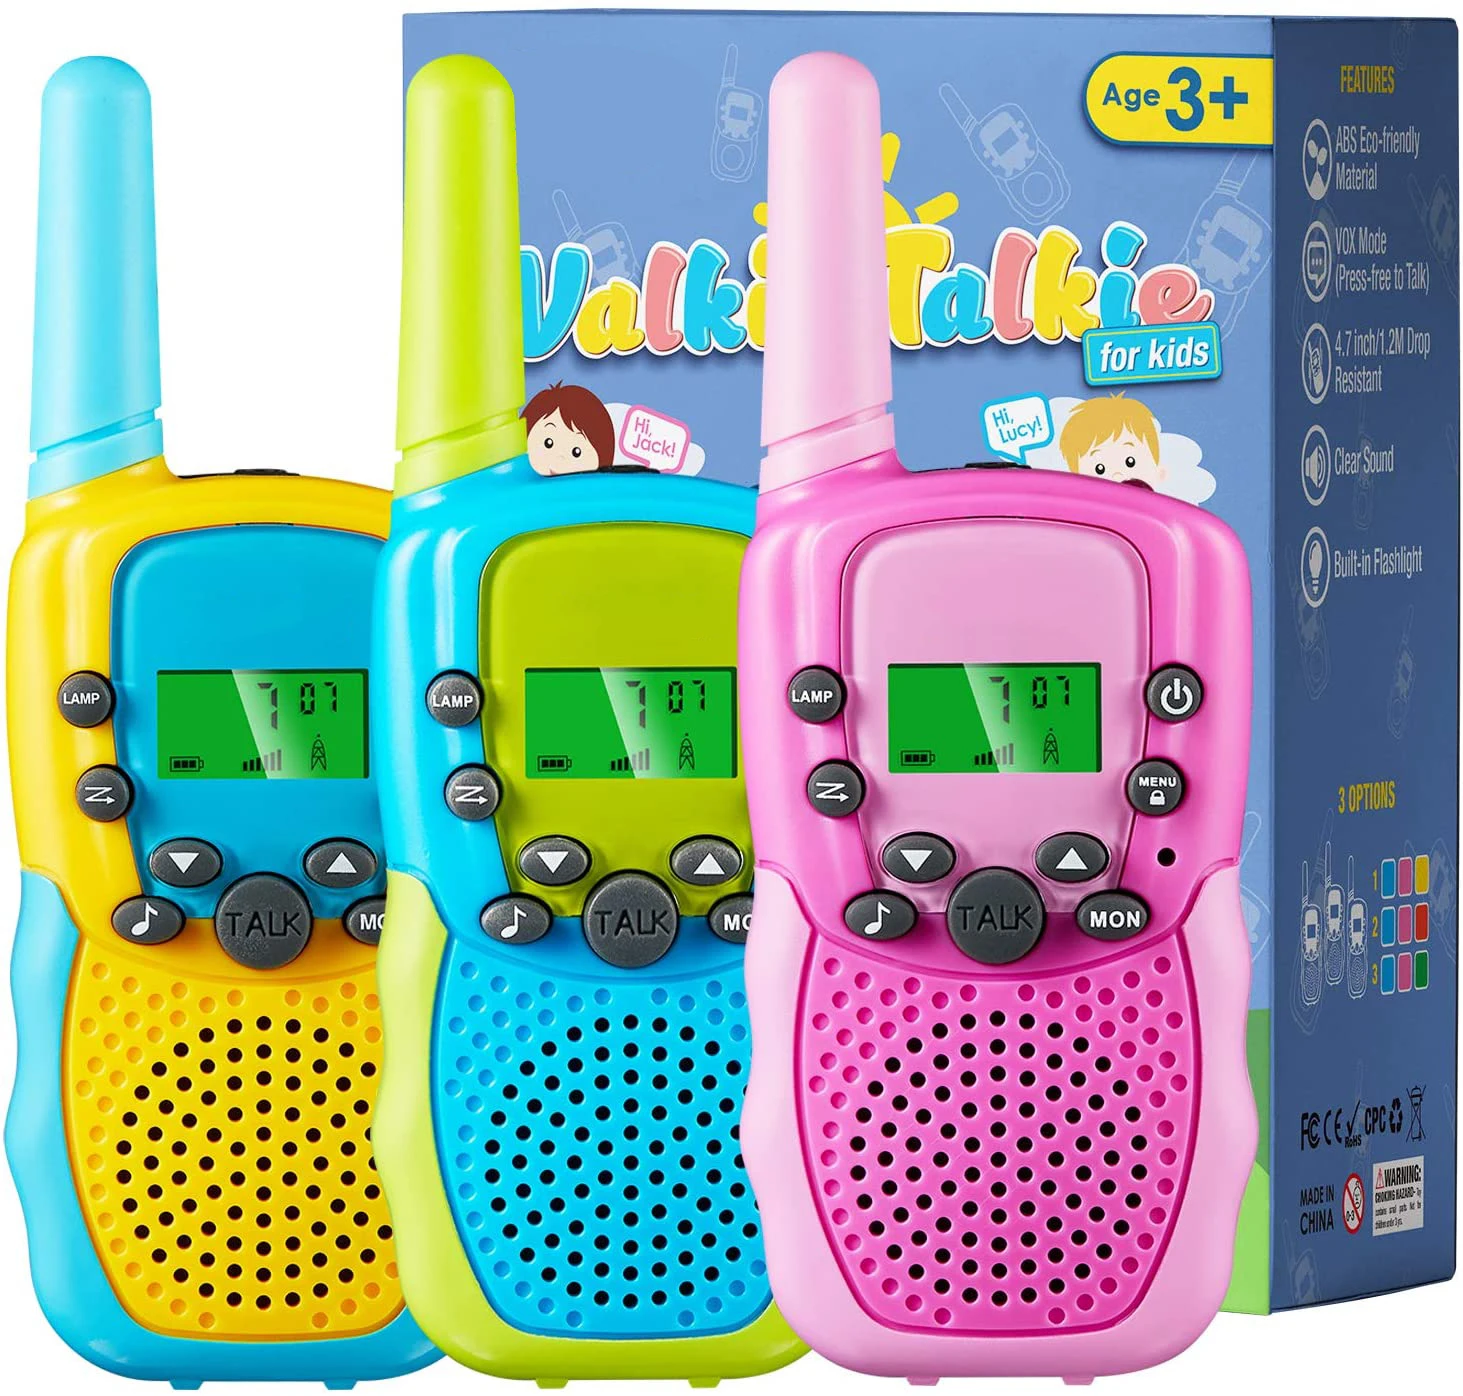 
Kids Walkie Talkie Two Ways Radio Toy Walkie Talkie for Kids 3 Miles Range 22 Channels Built in Flash Light  (62022957606)